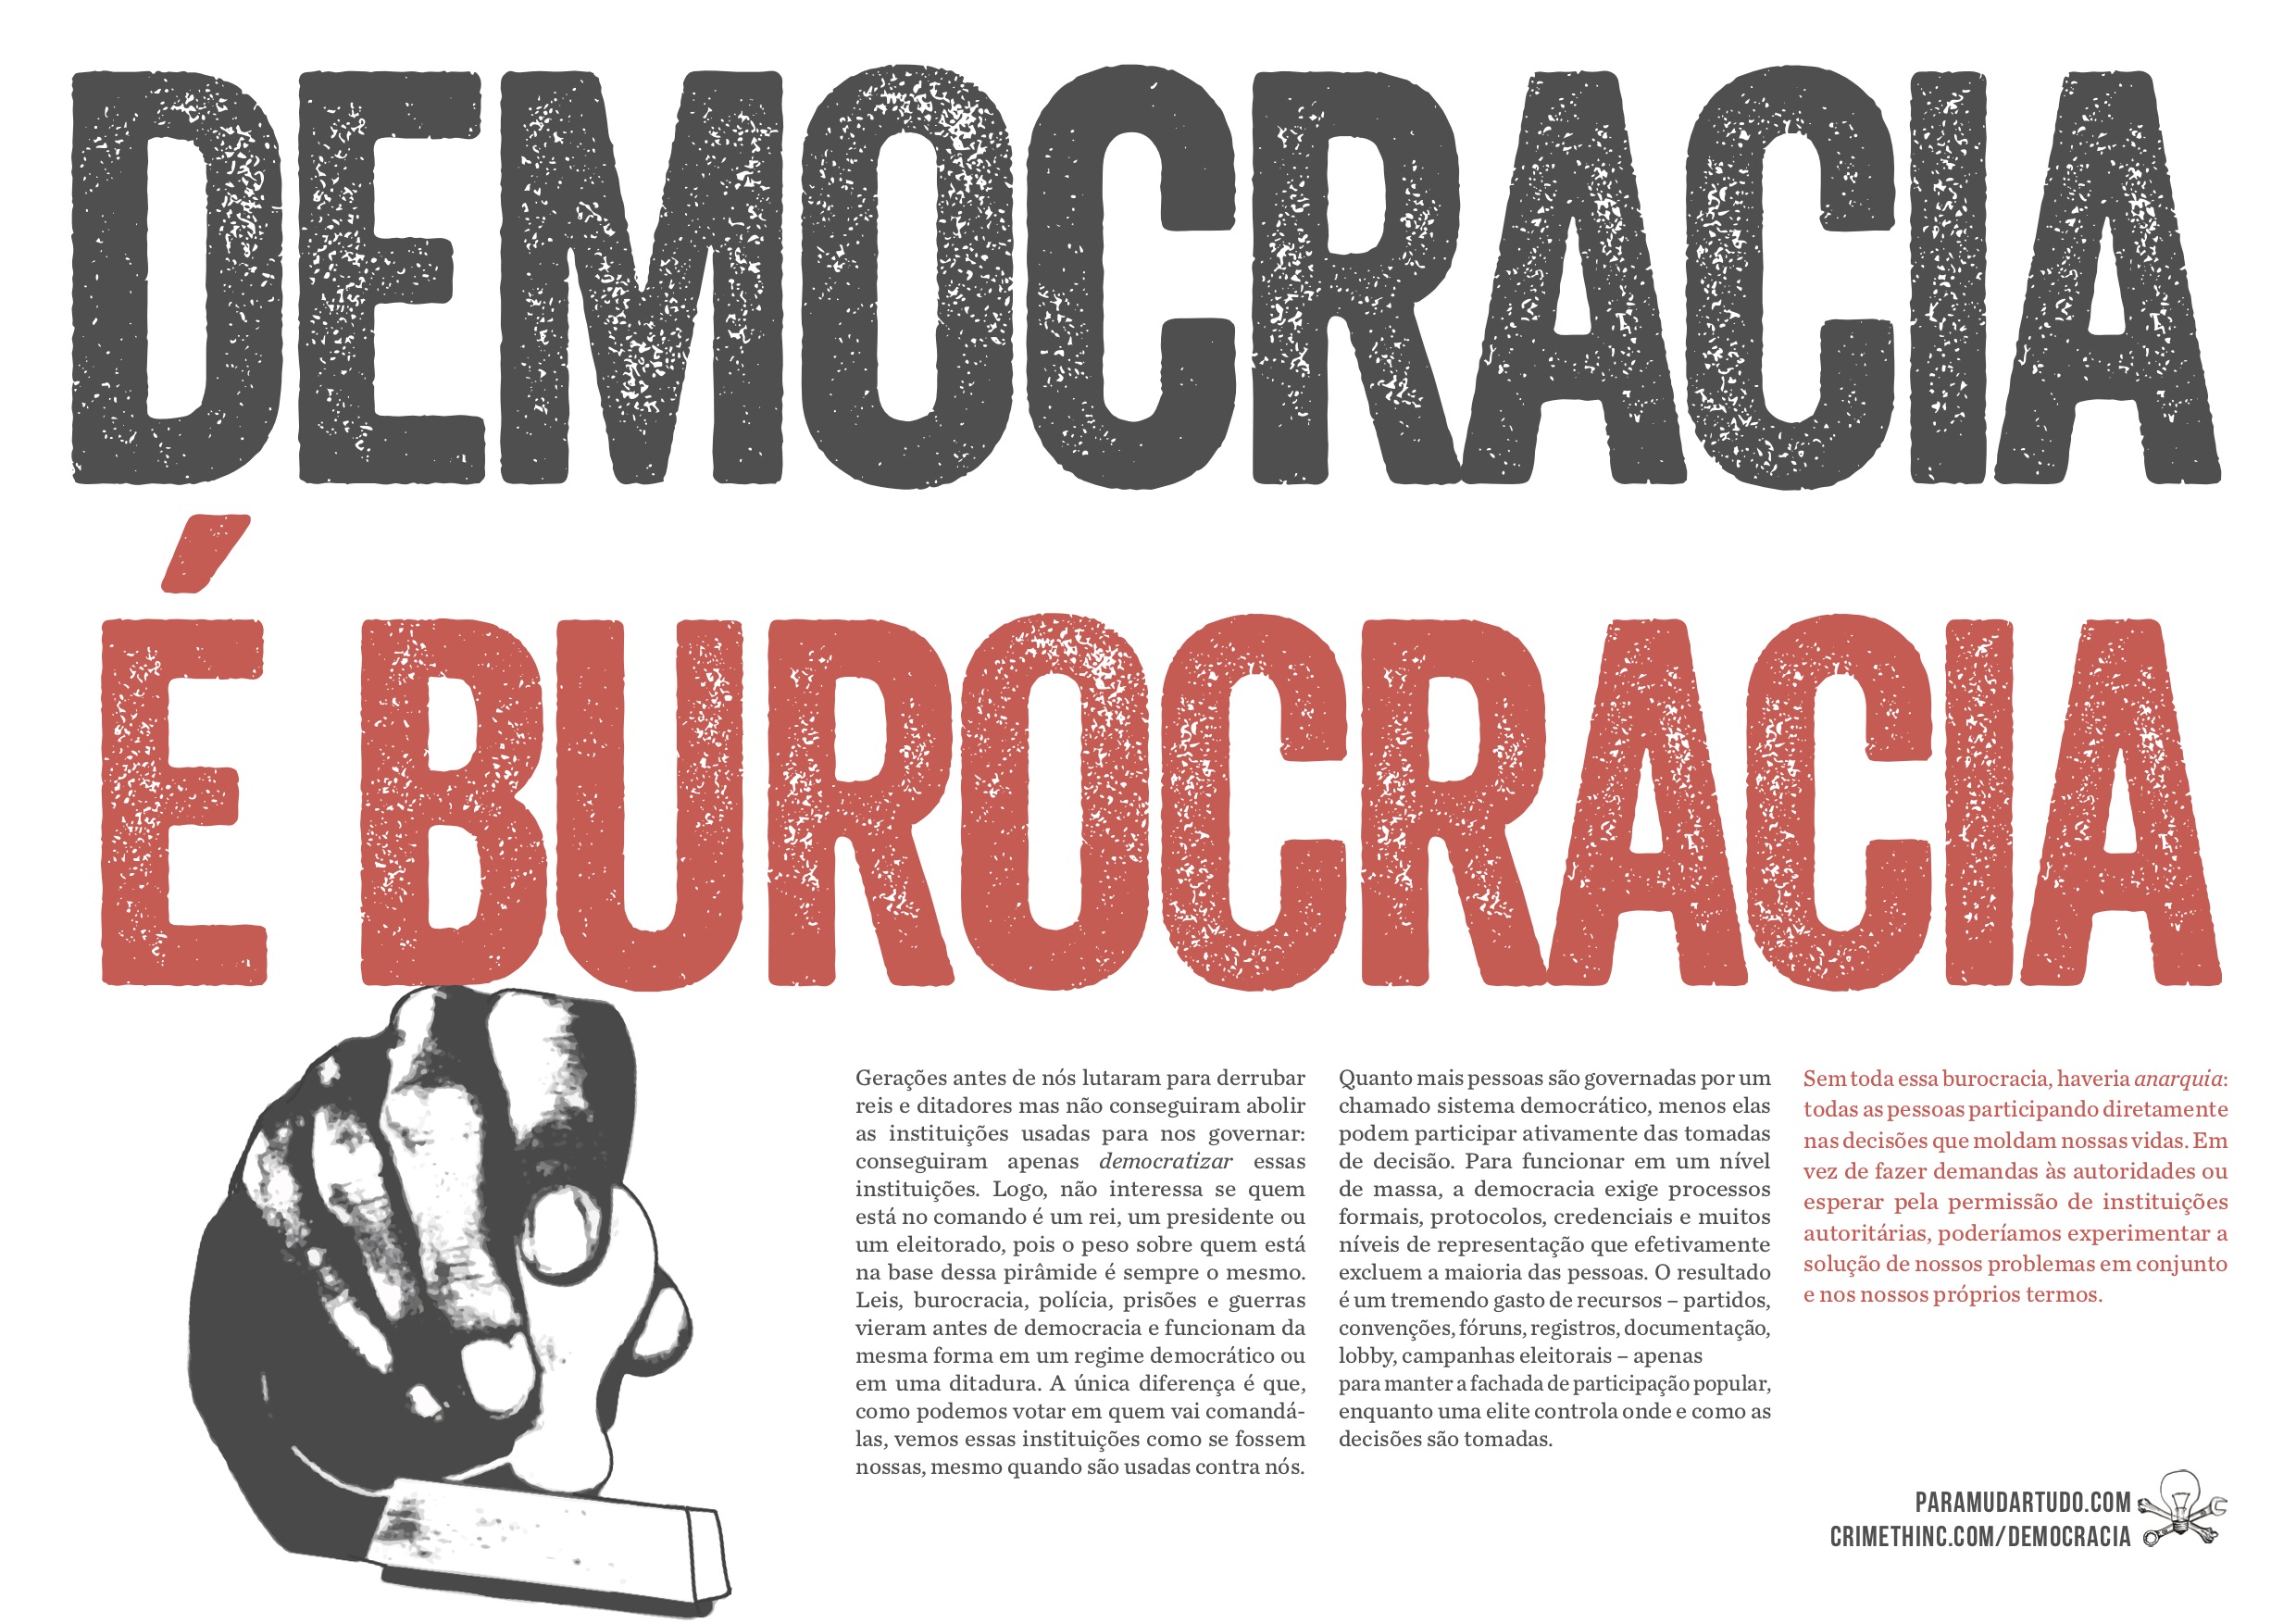 Photo of ‘Democracia é Burocracia’ front side